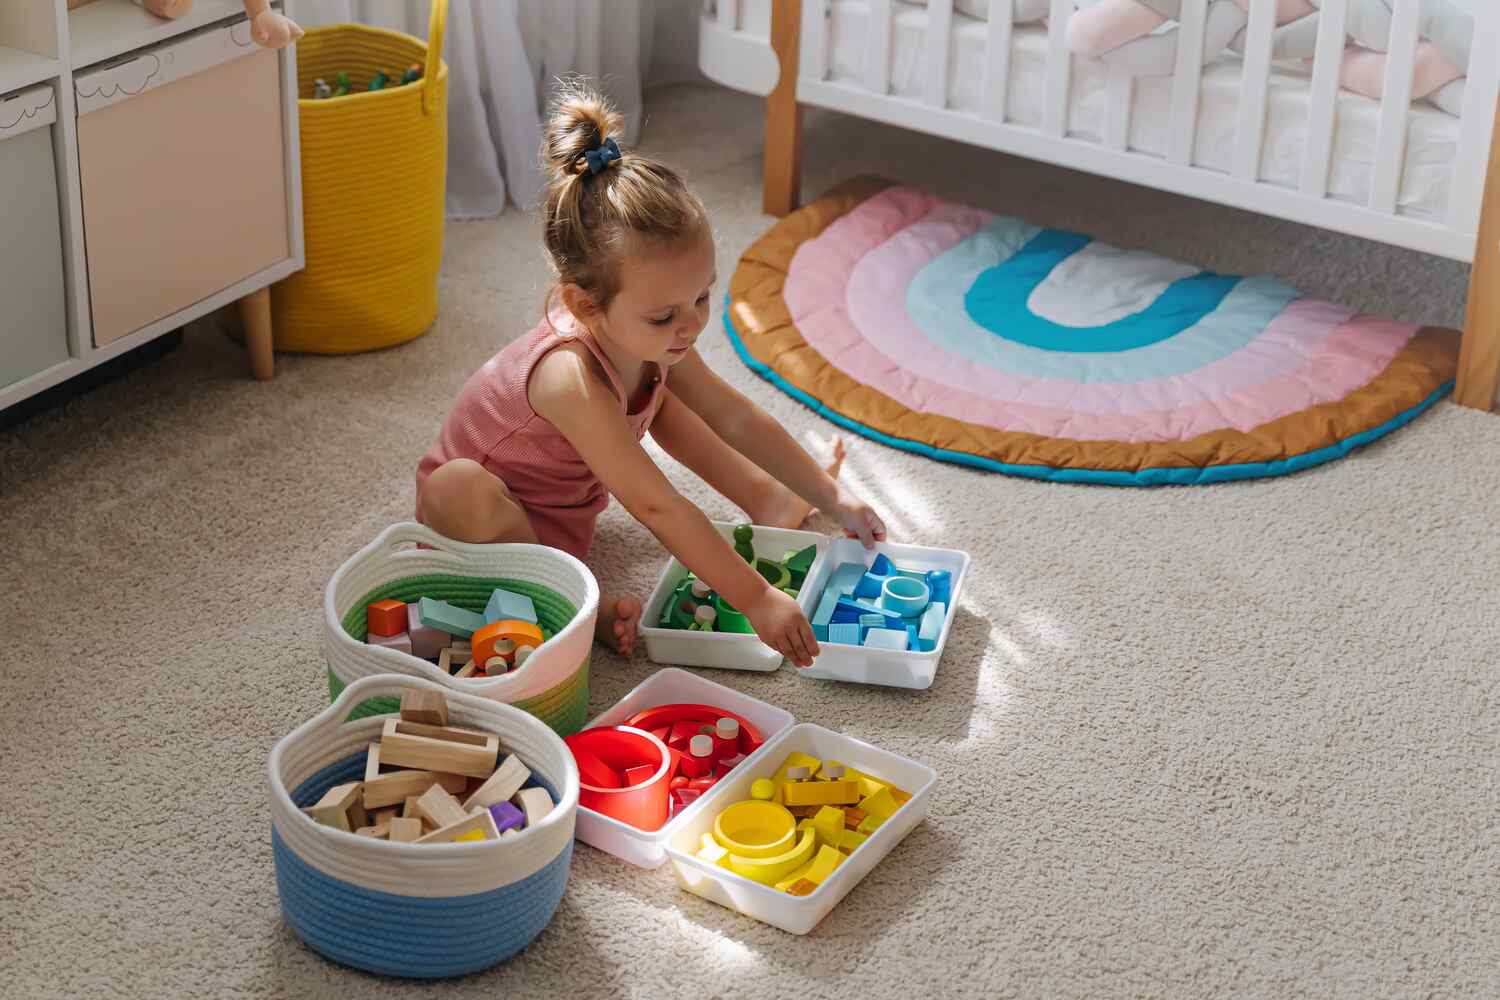 A toddler girl arranging her toys